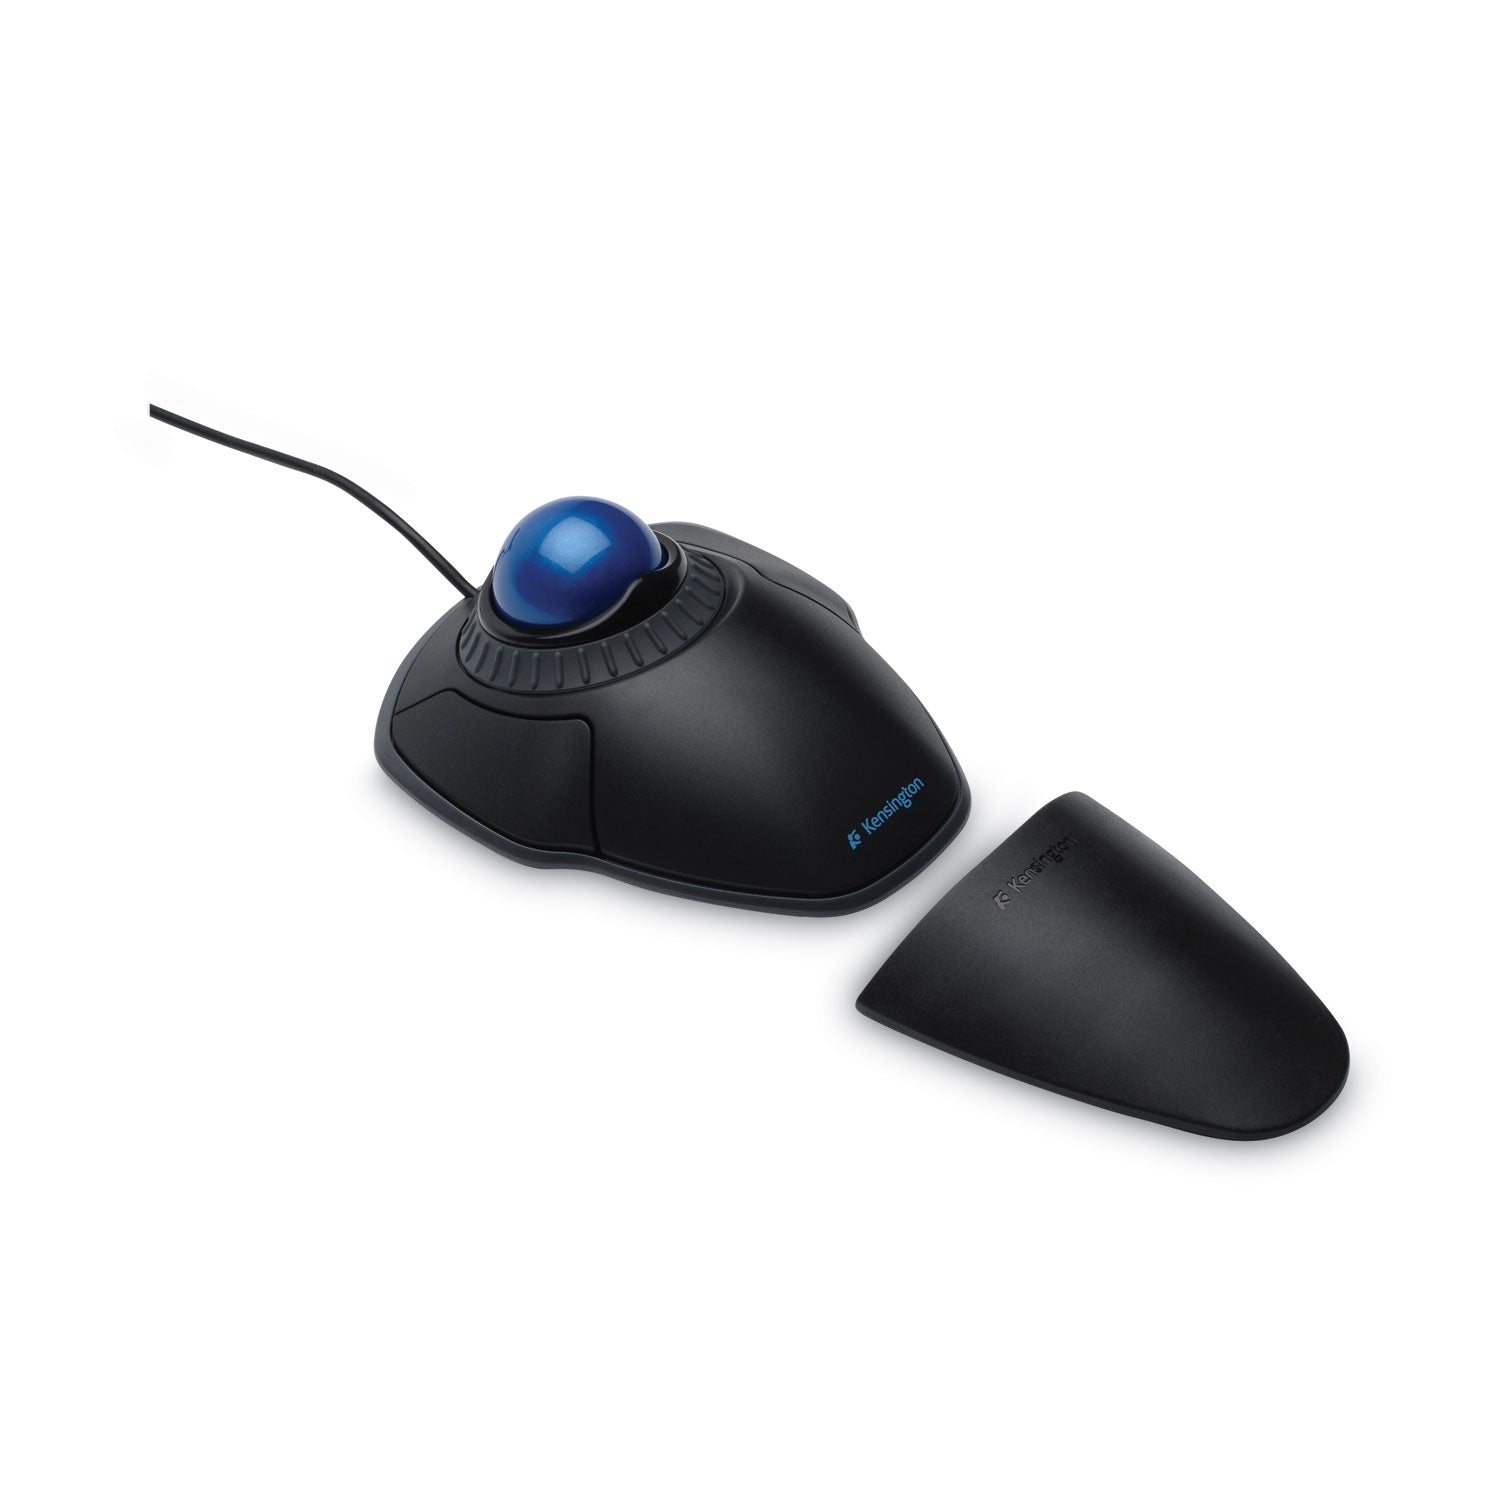 Orbit Trackball with Scroll Ring, USB 2.0, Left/Right Hand Use, Black/Blue - 